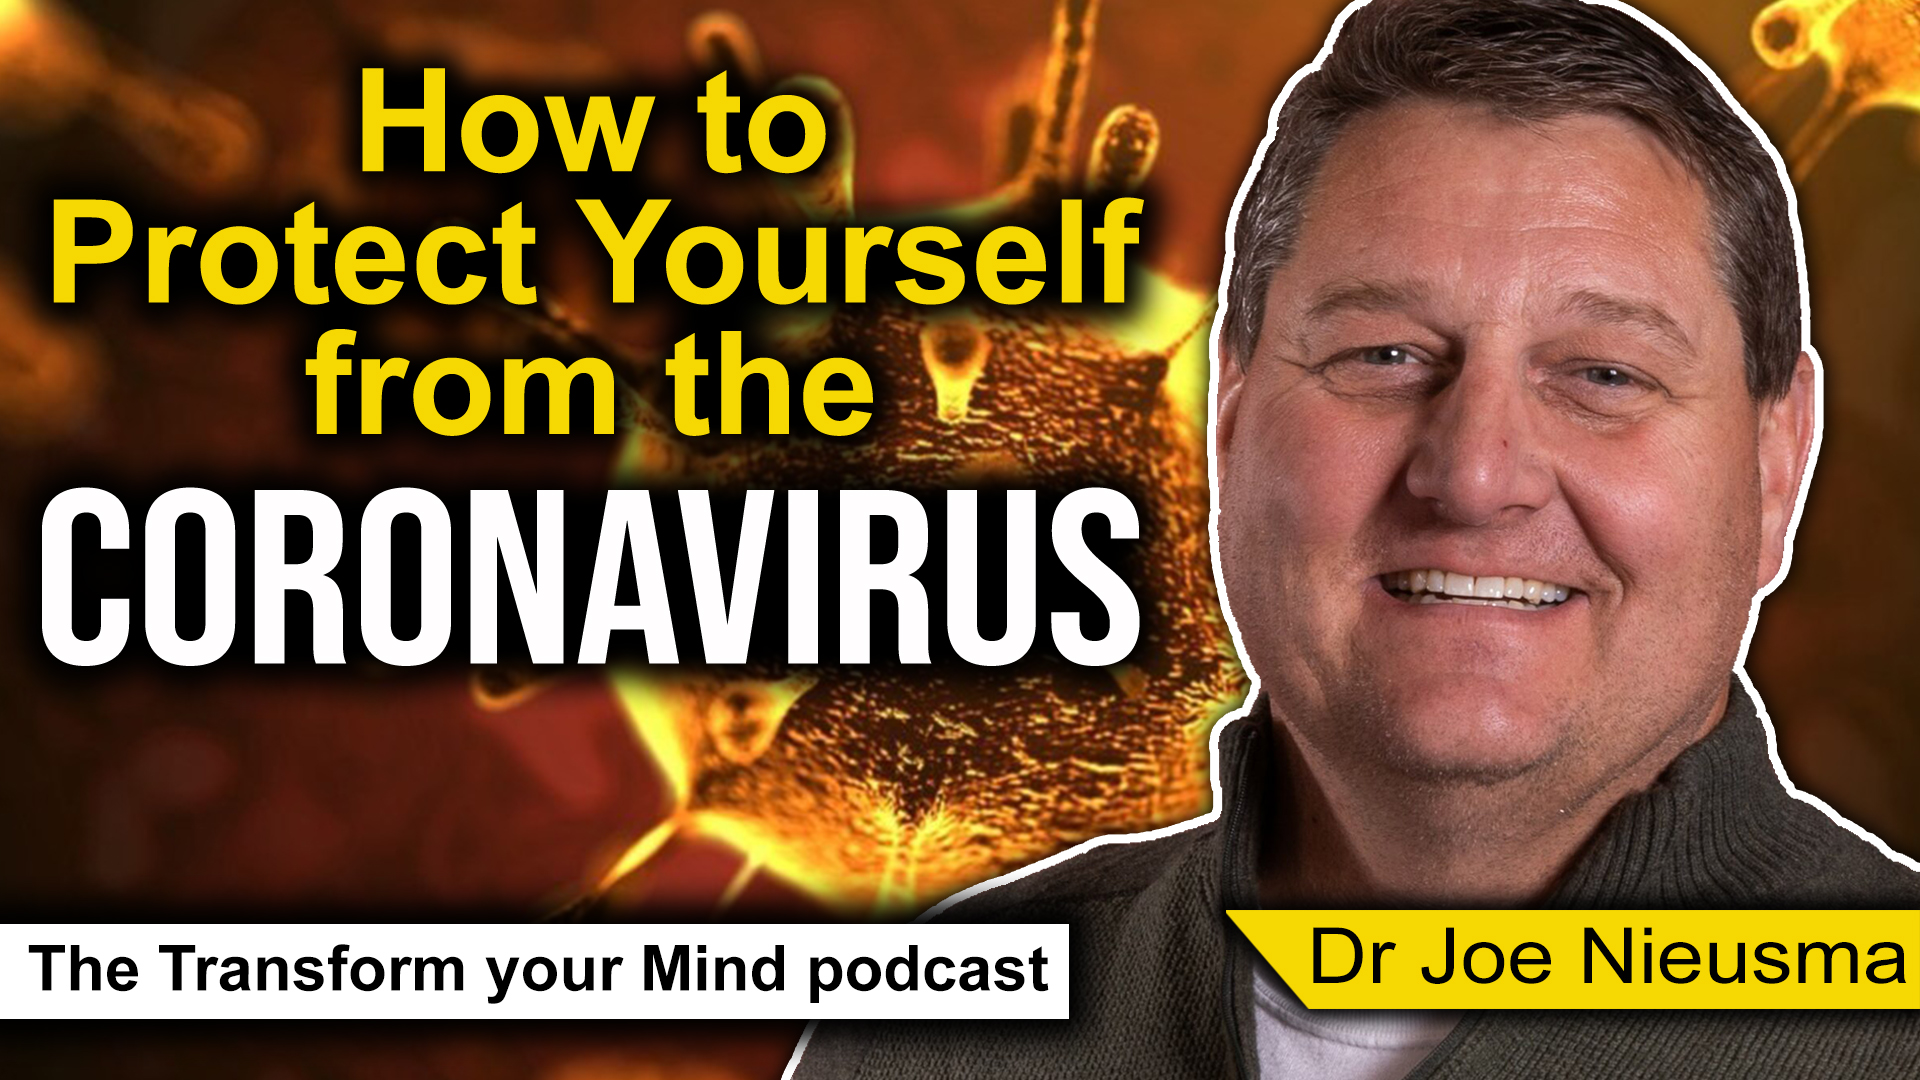 Coronavirus, How to Protect Yourself